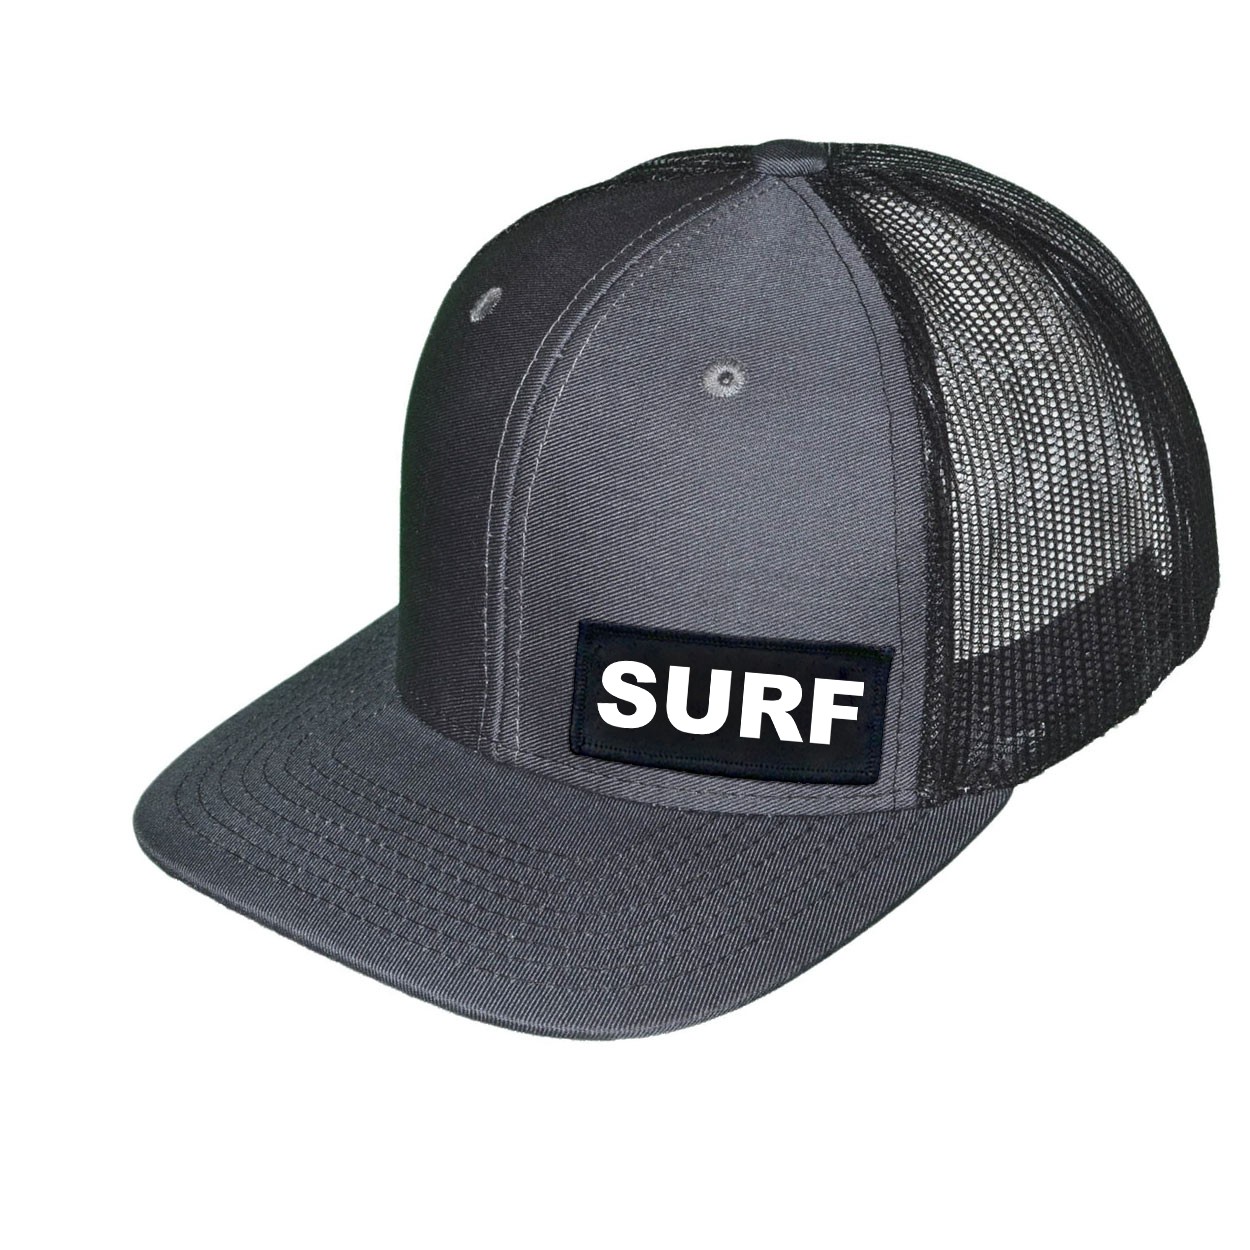 Surf Brand Logo Night Out Woven Patch Snapback Trucker Hat Dark Gray/Black (White Logo)